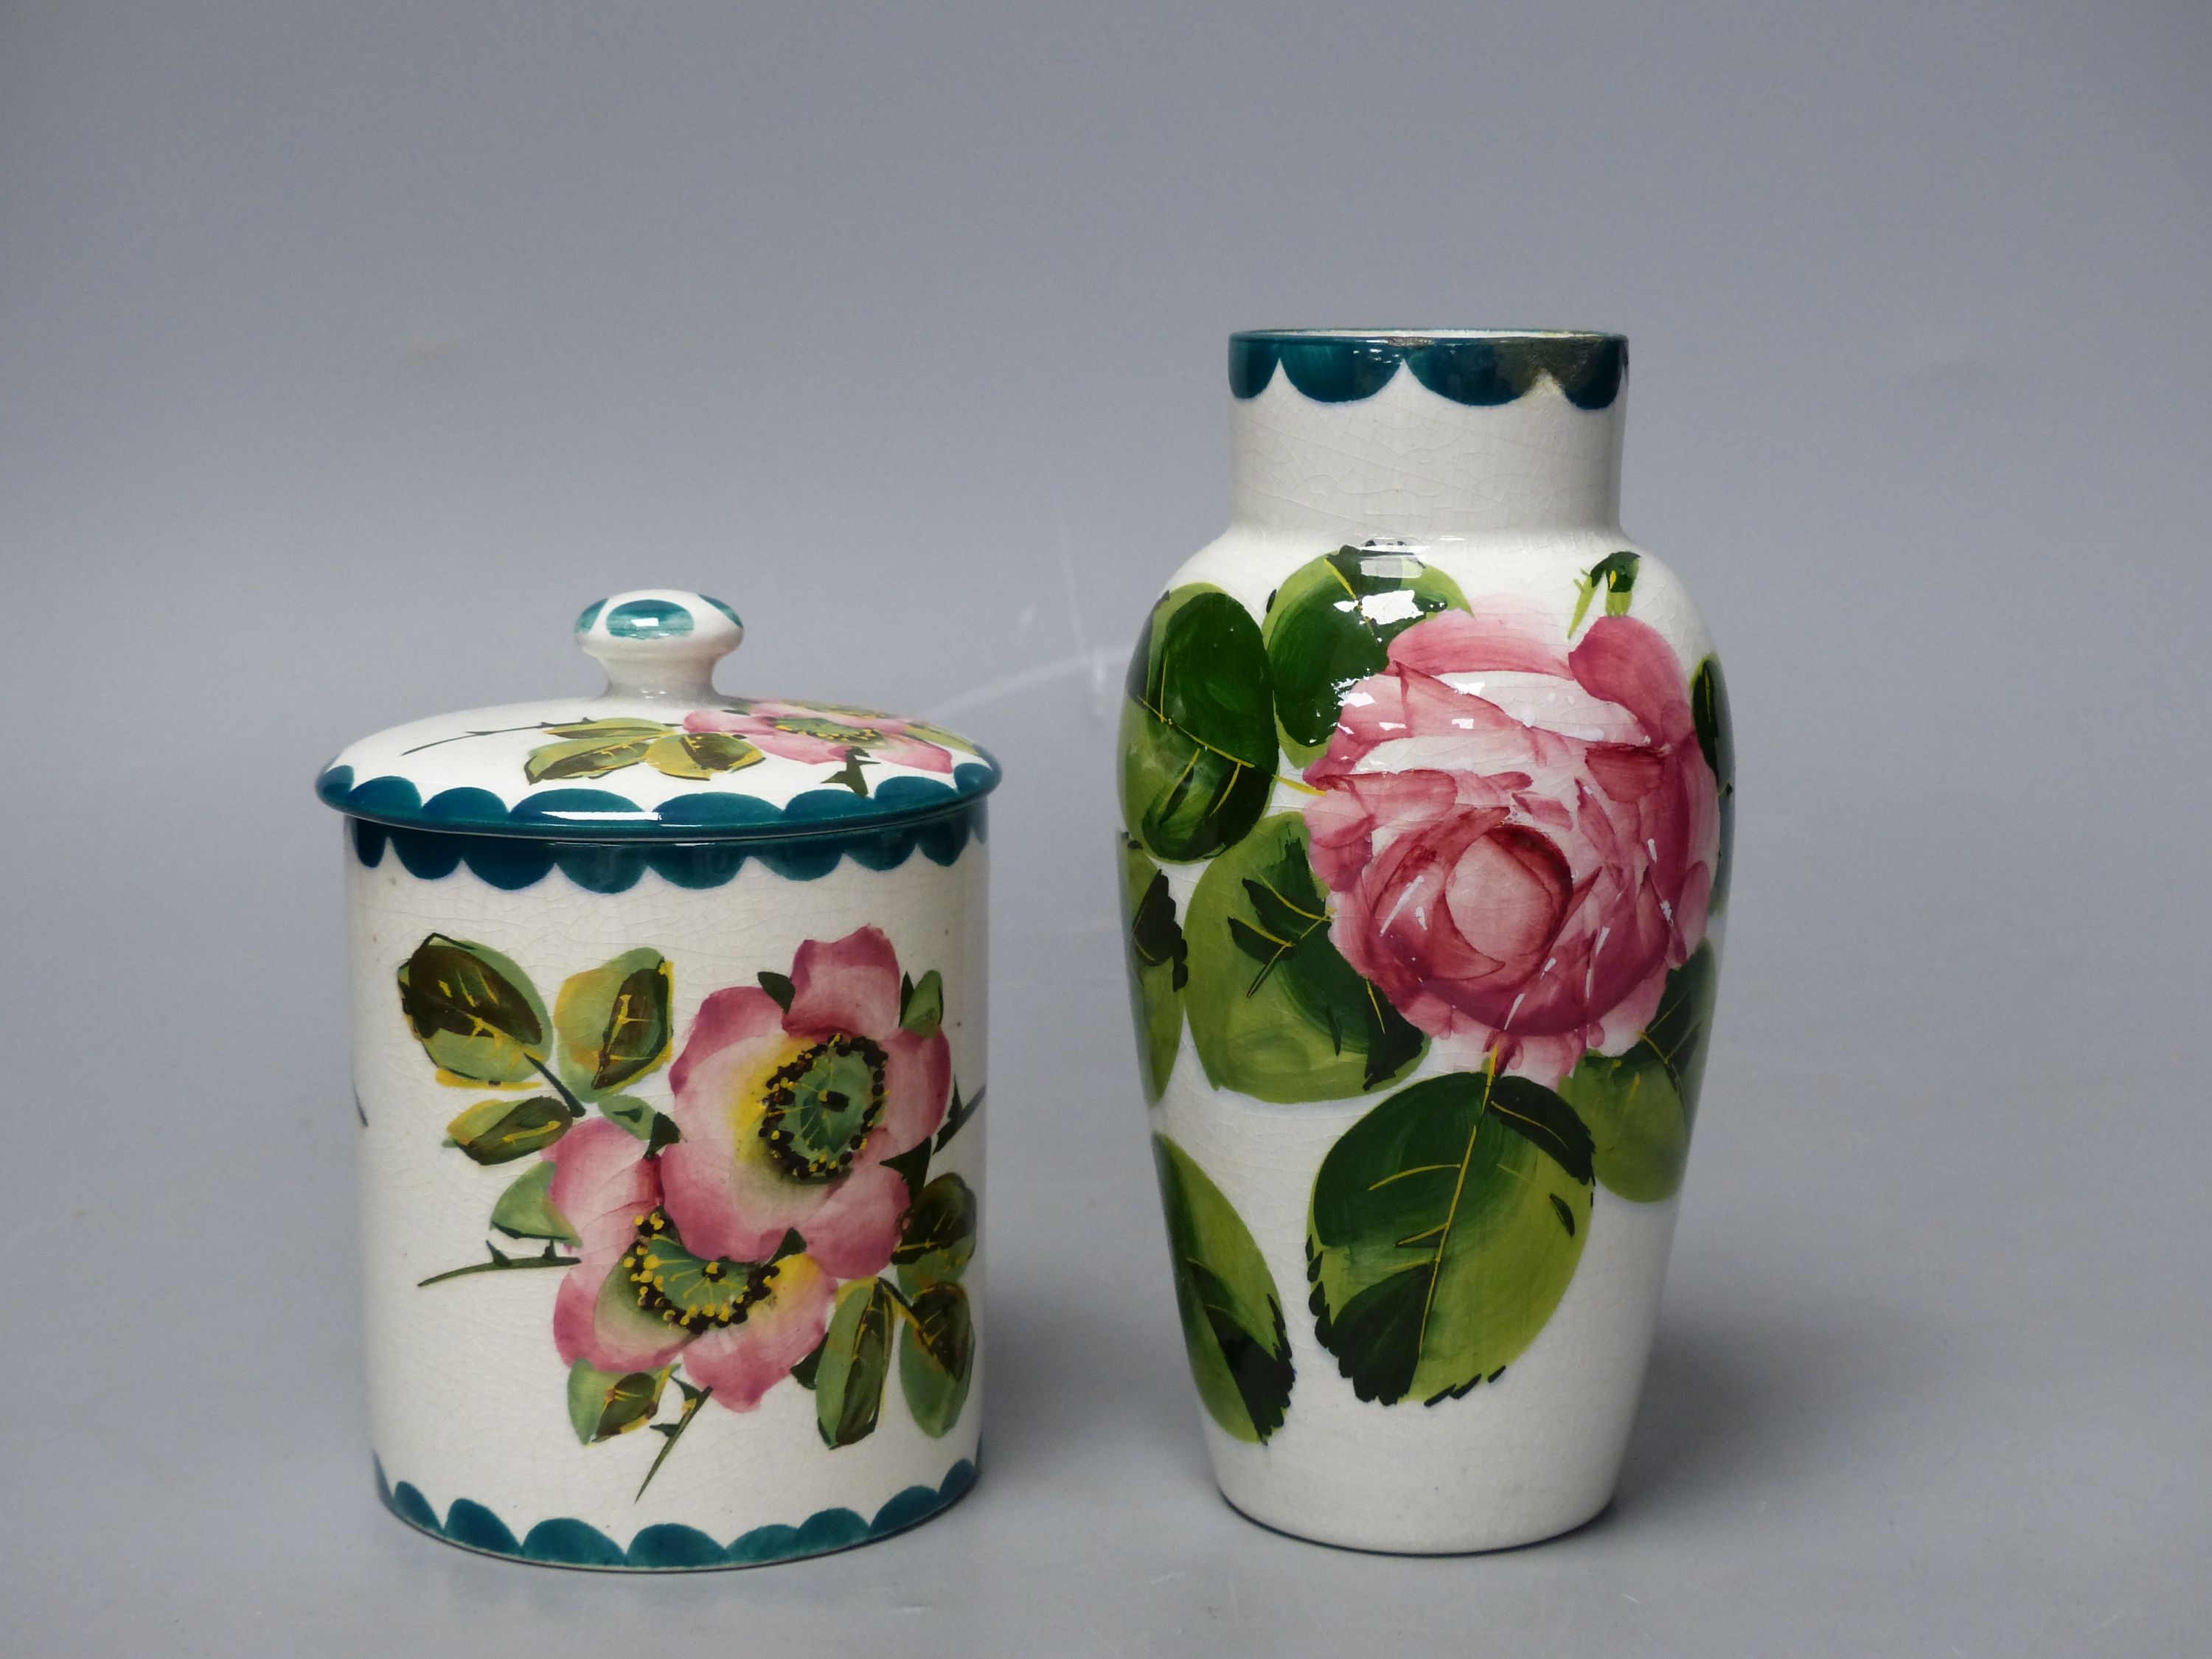 A Wemyss cabbage rose vase and a wild rose pattern lidded preserve jar, tallest 16cm